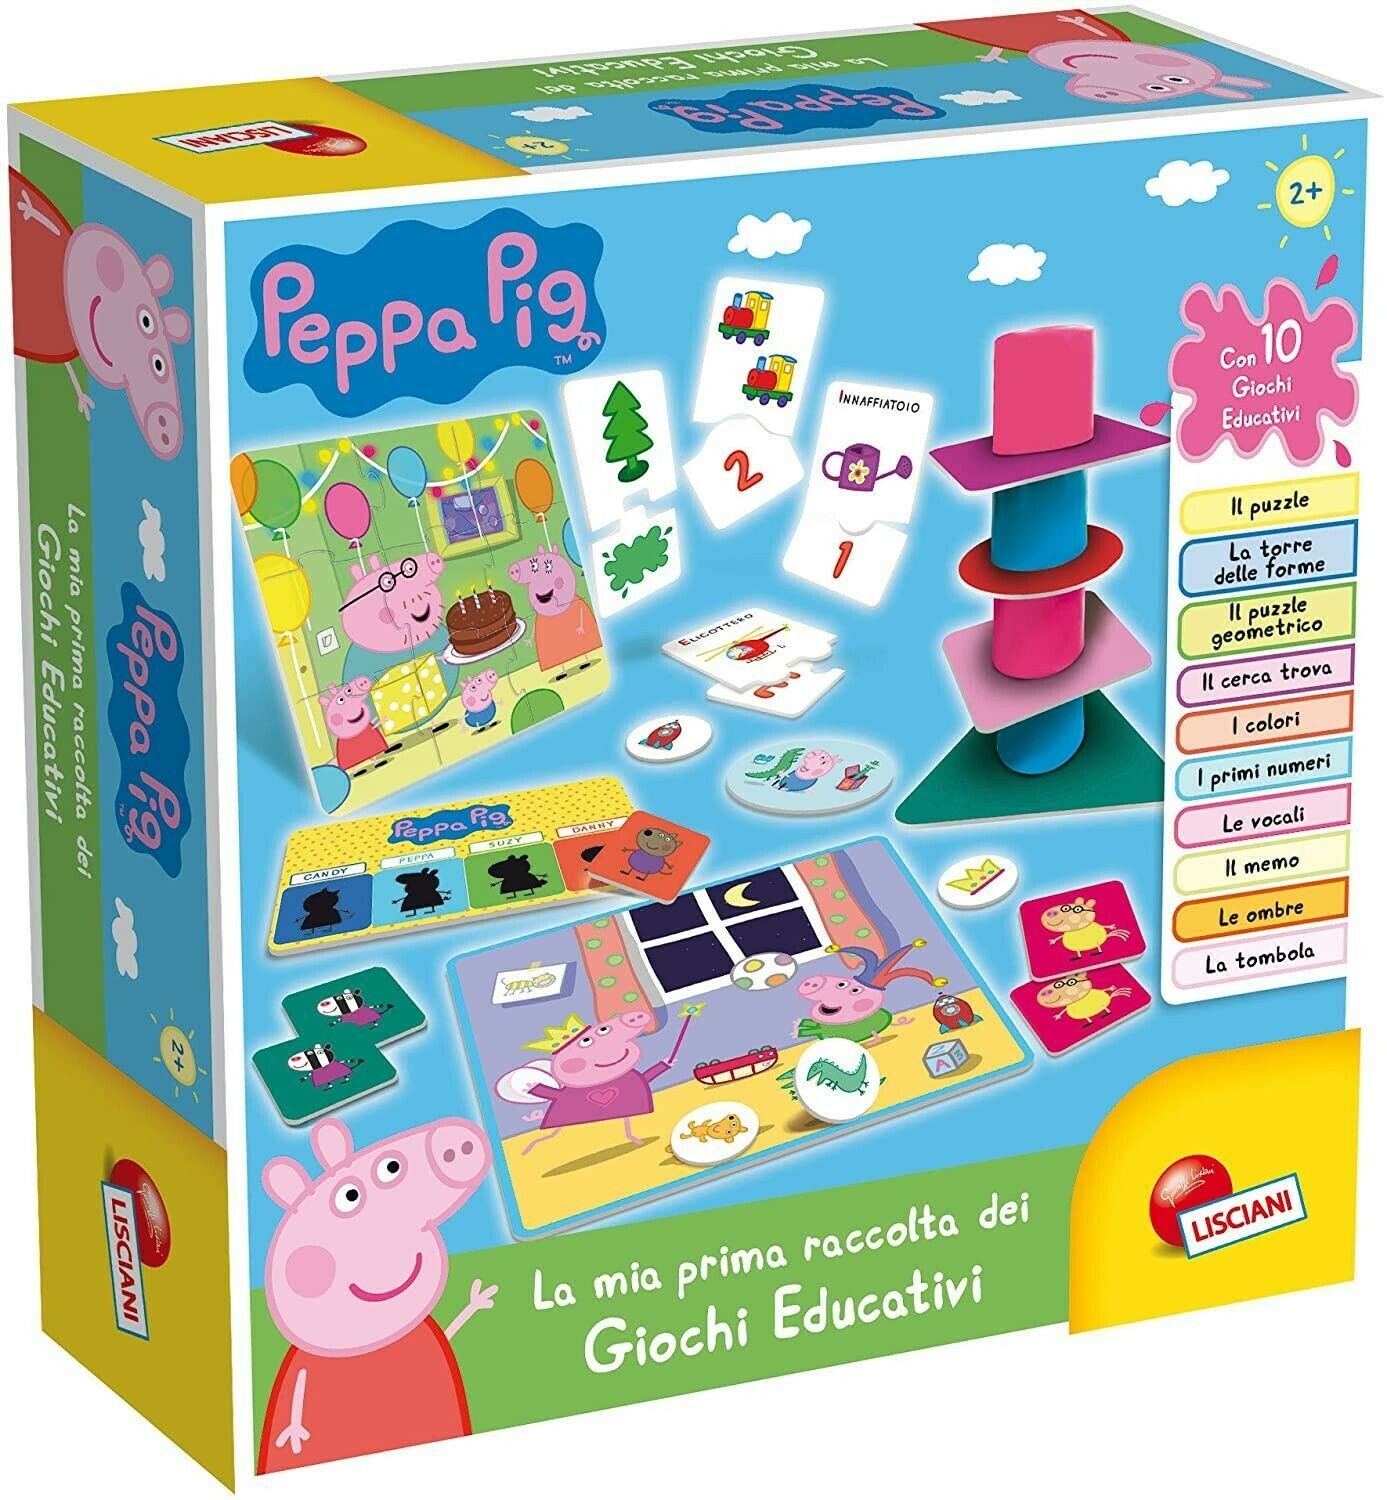 Peppa Pig - Educational Games Collection სამაგიდო თამაში